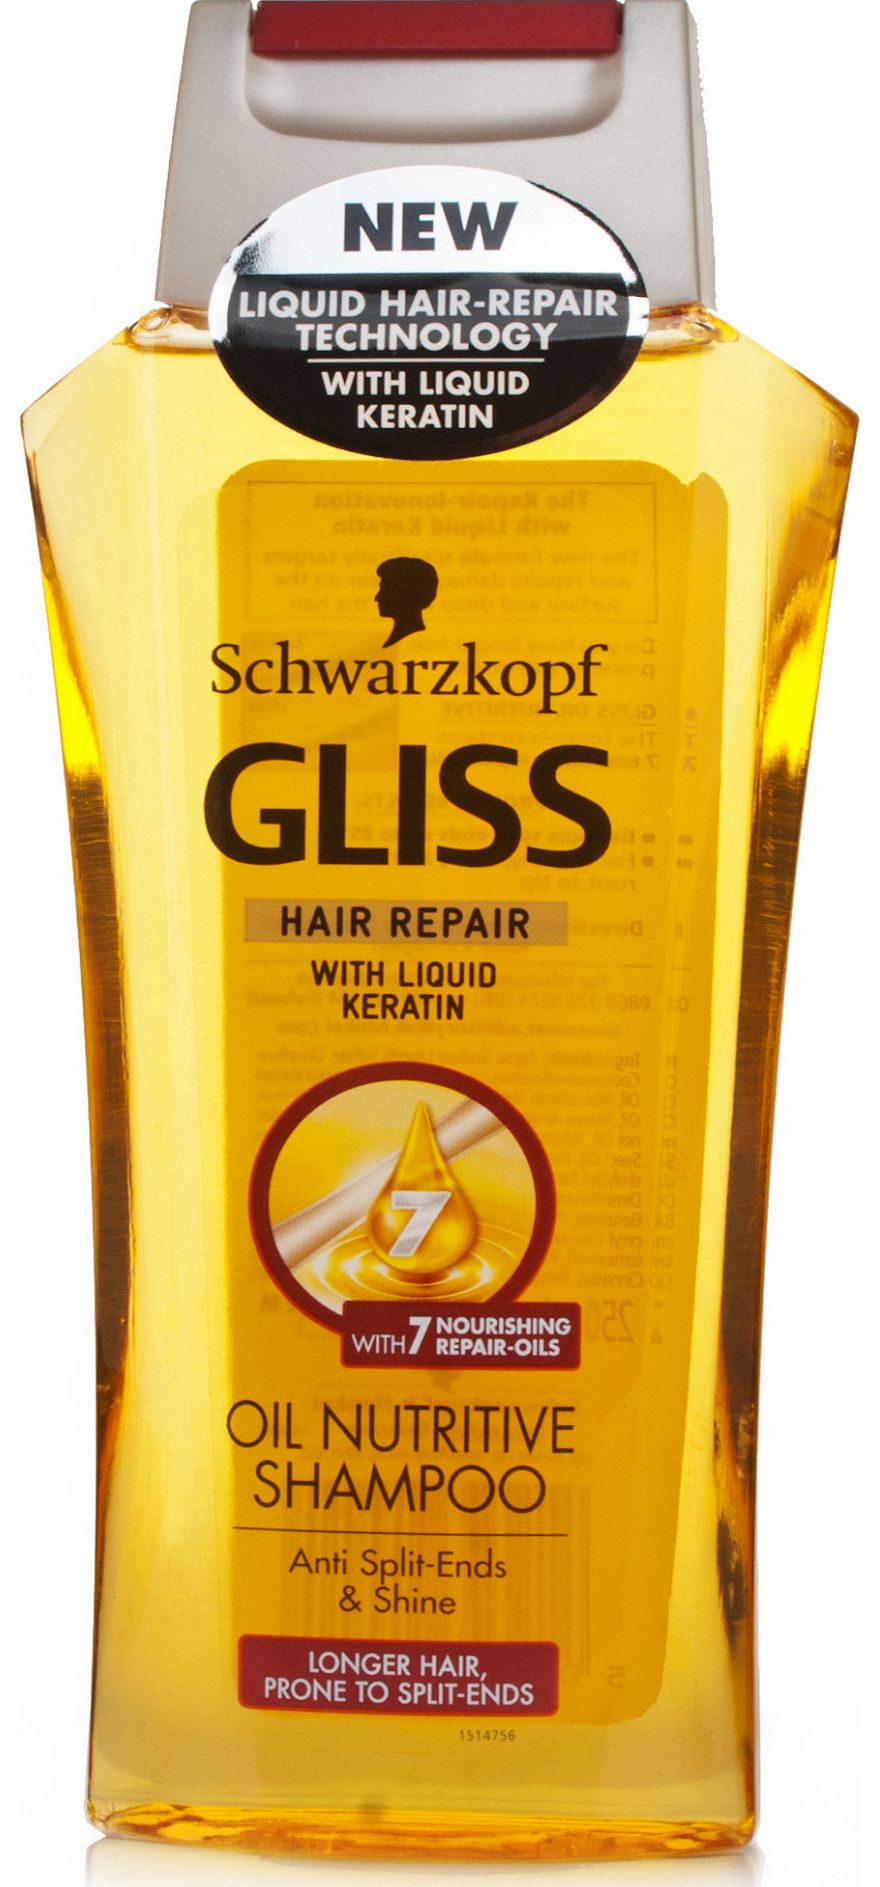 Gliss Oil Nutritive Shampoo